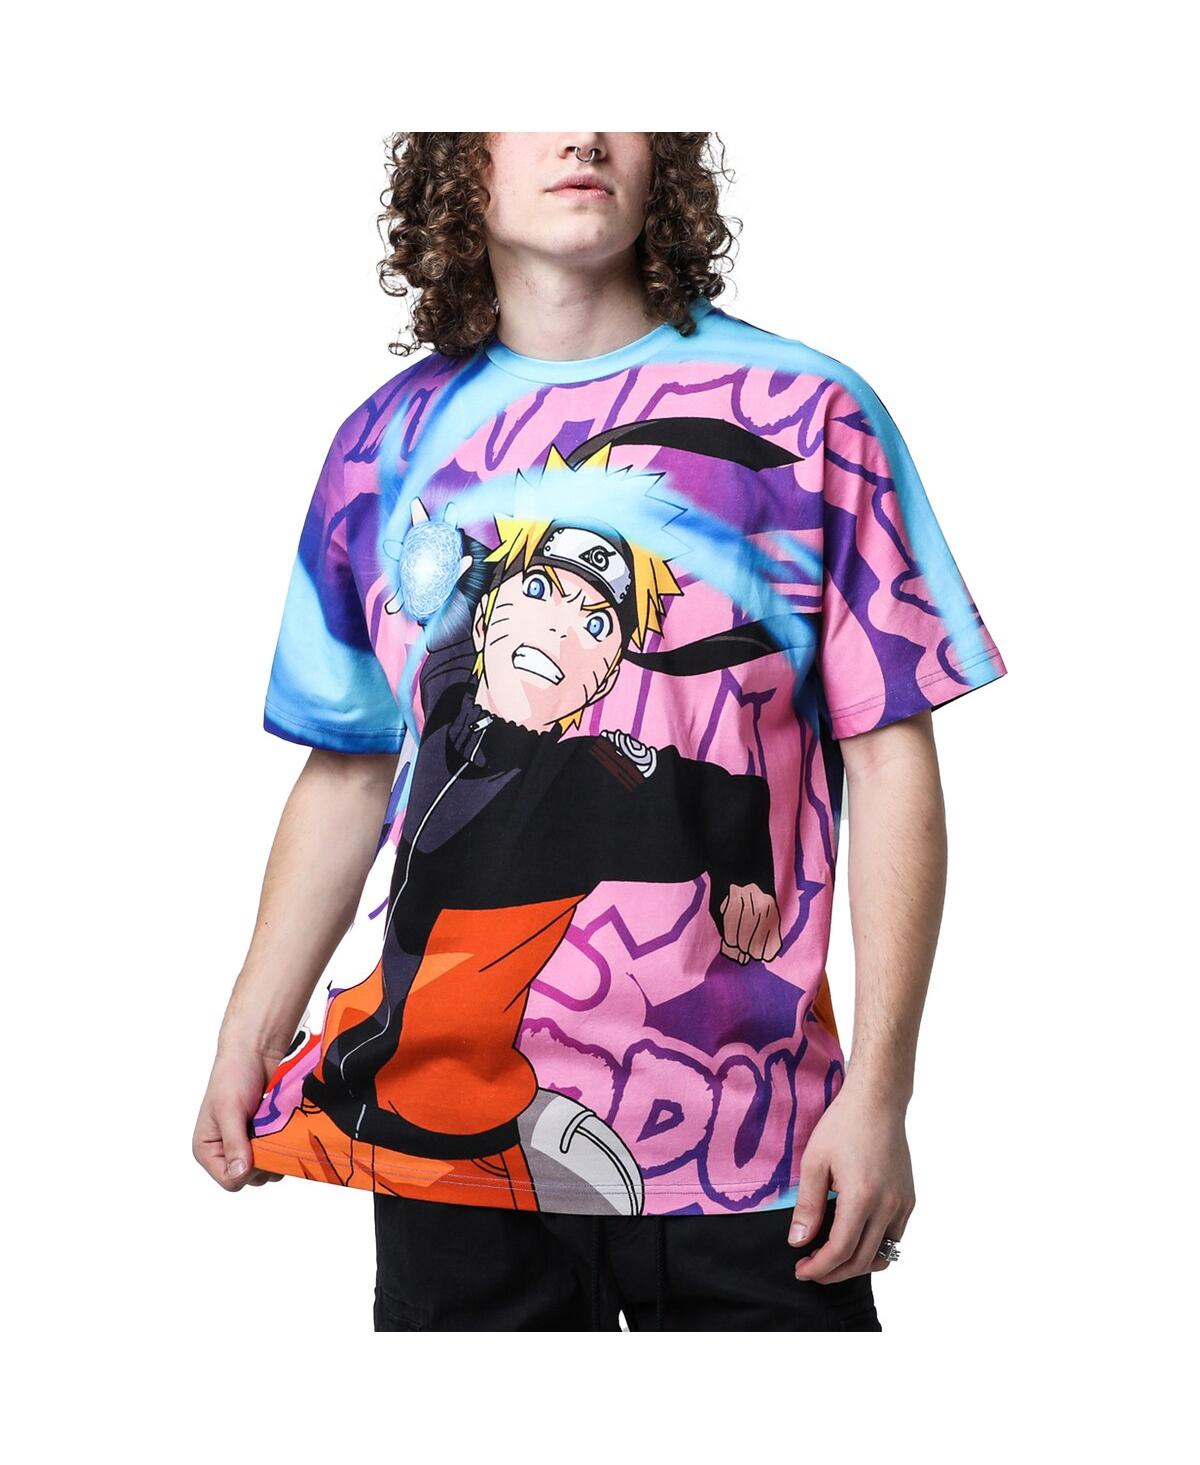 Dumbgood Men's And Women's  Blue Naruto Big Print Graphic T-shirt